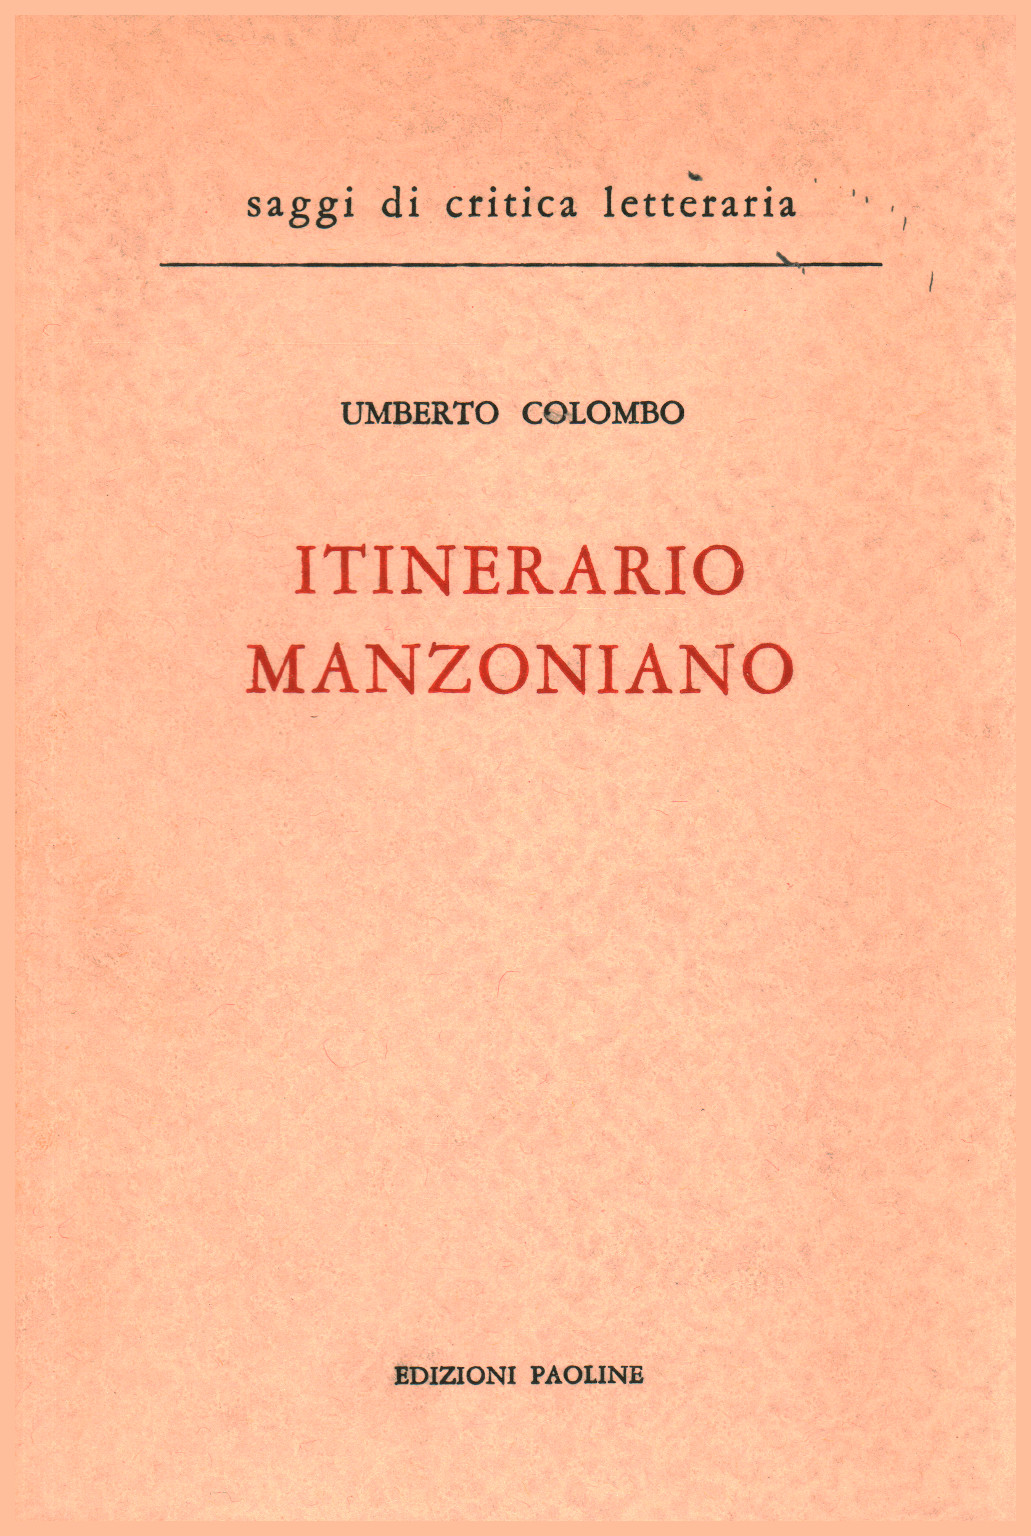 Itinerario manzoniano, s.a.